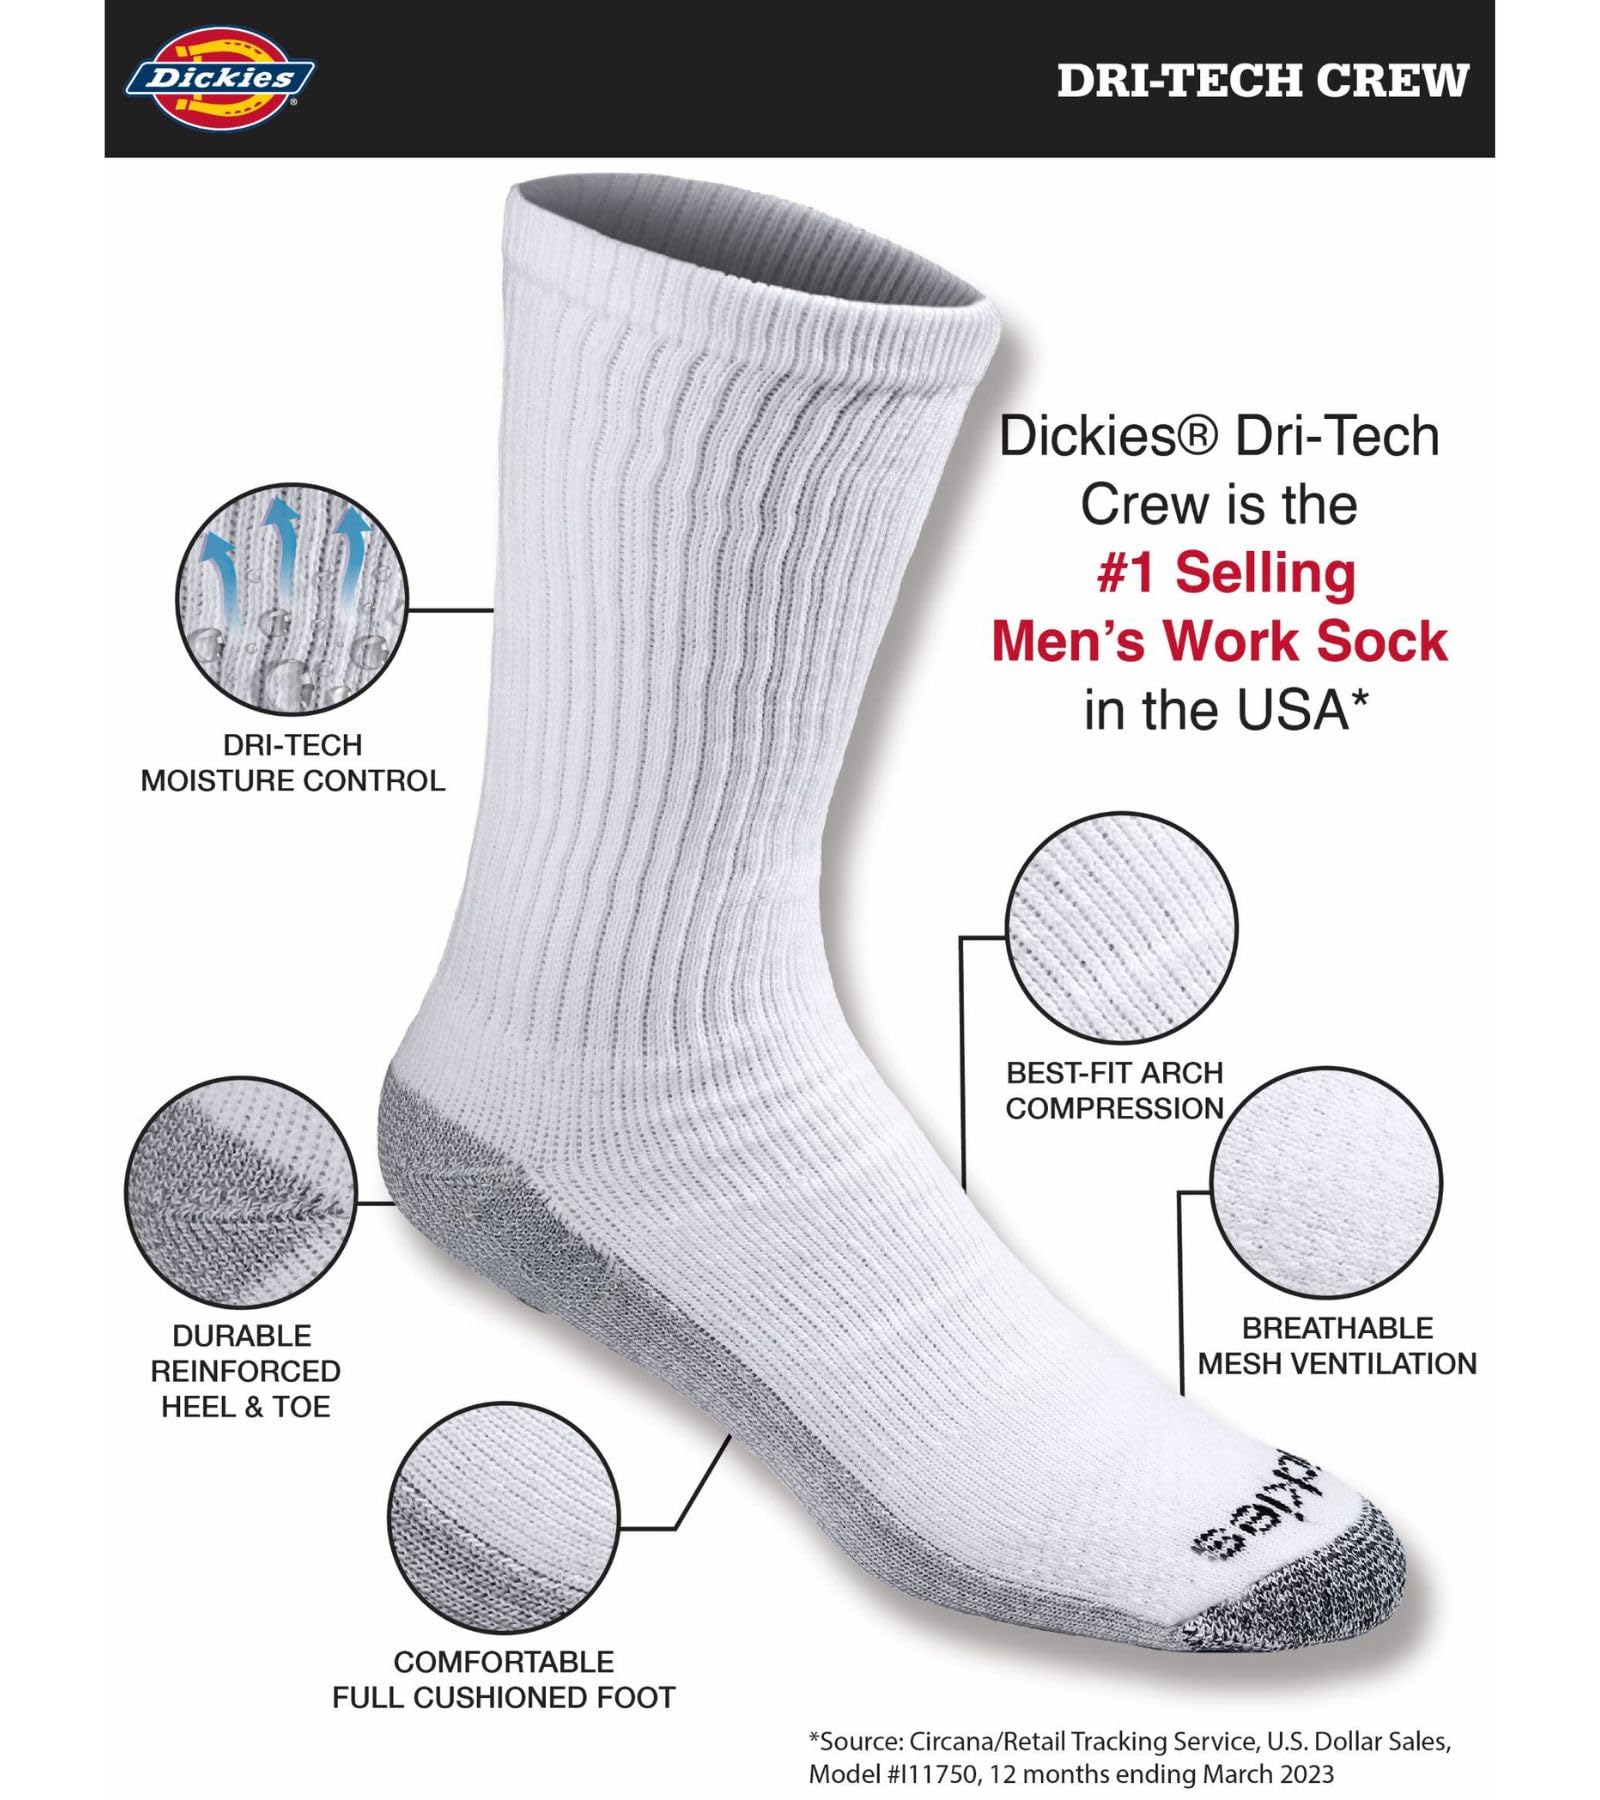 Dickies mens Dri-tech Moisture Control Crew Multipack Socks, White (6 Pairs), Shoe Size 6-12 US